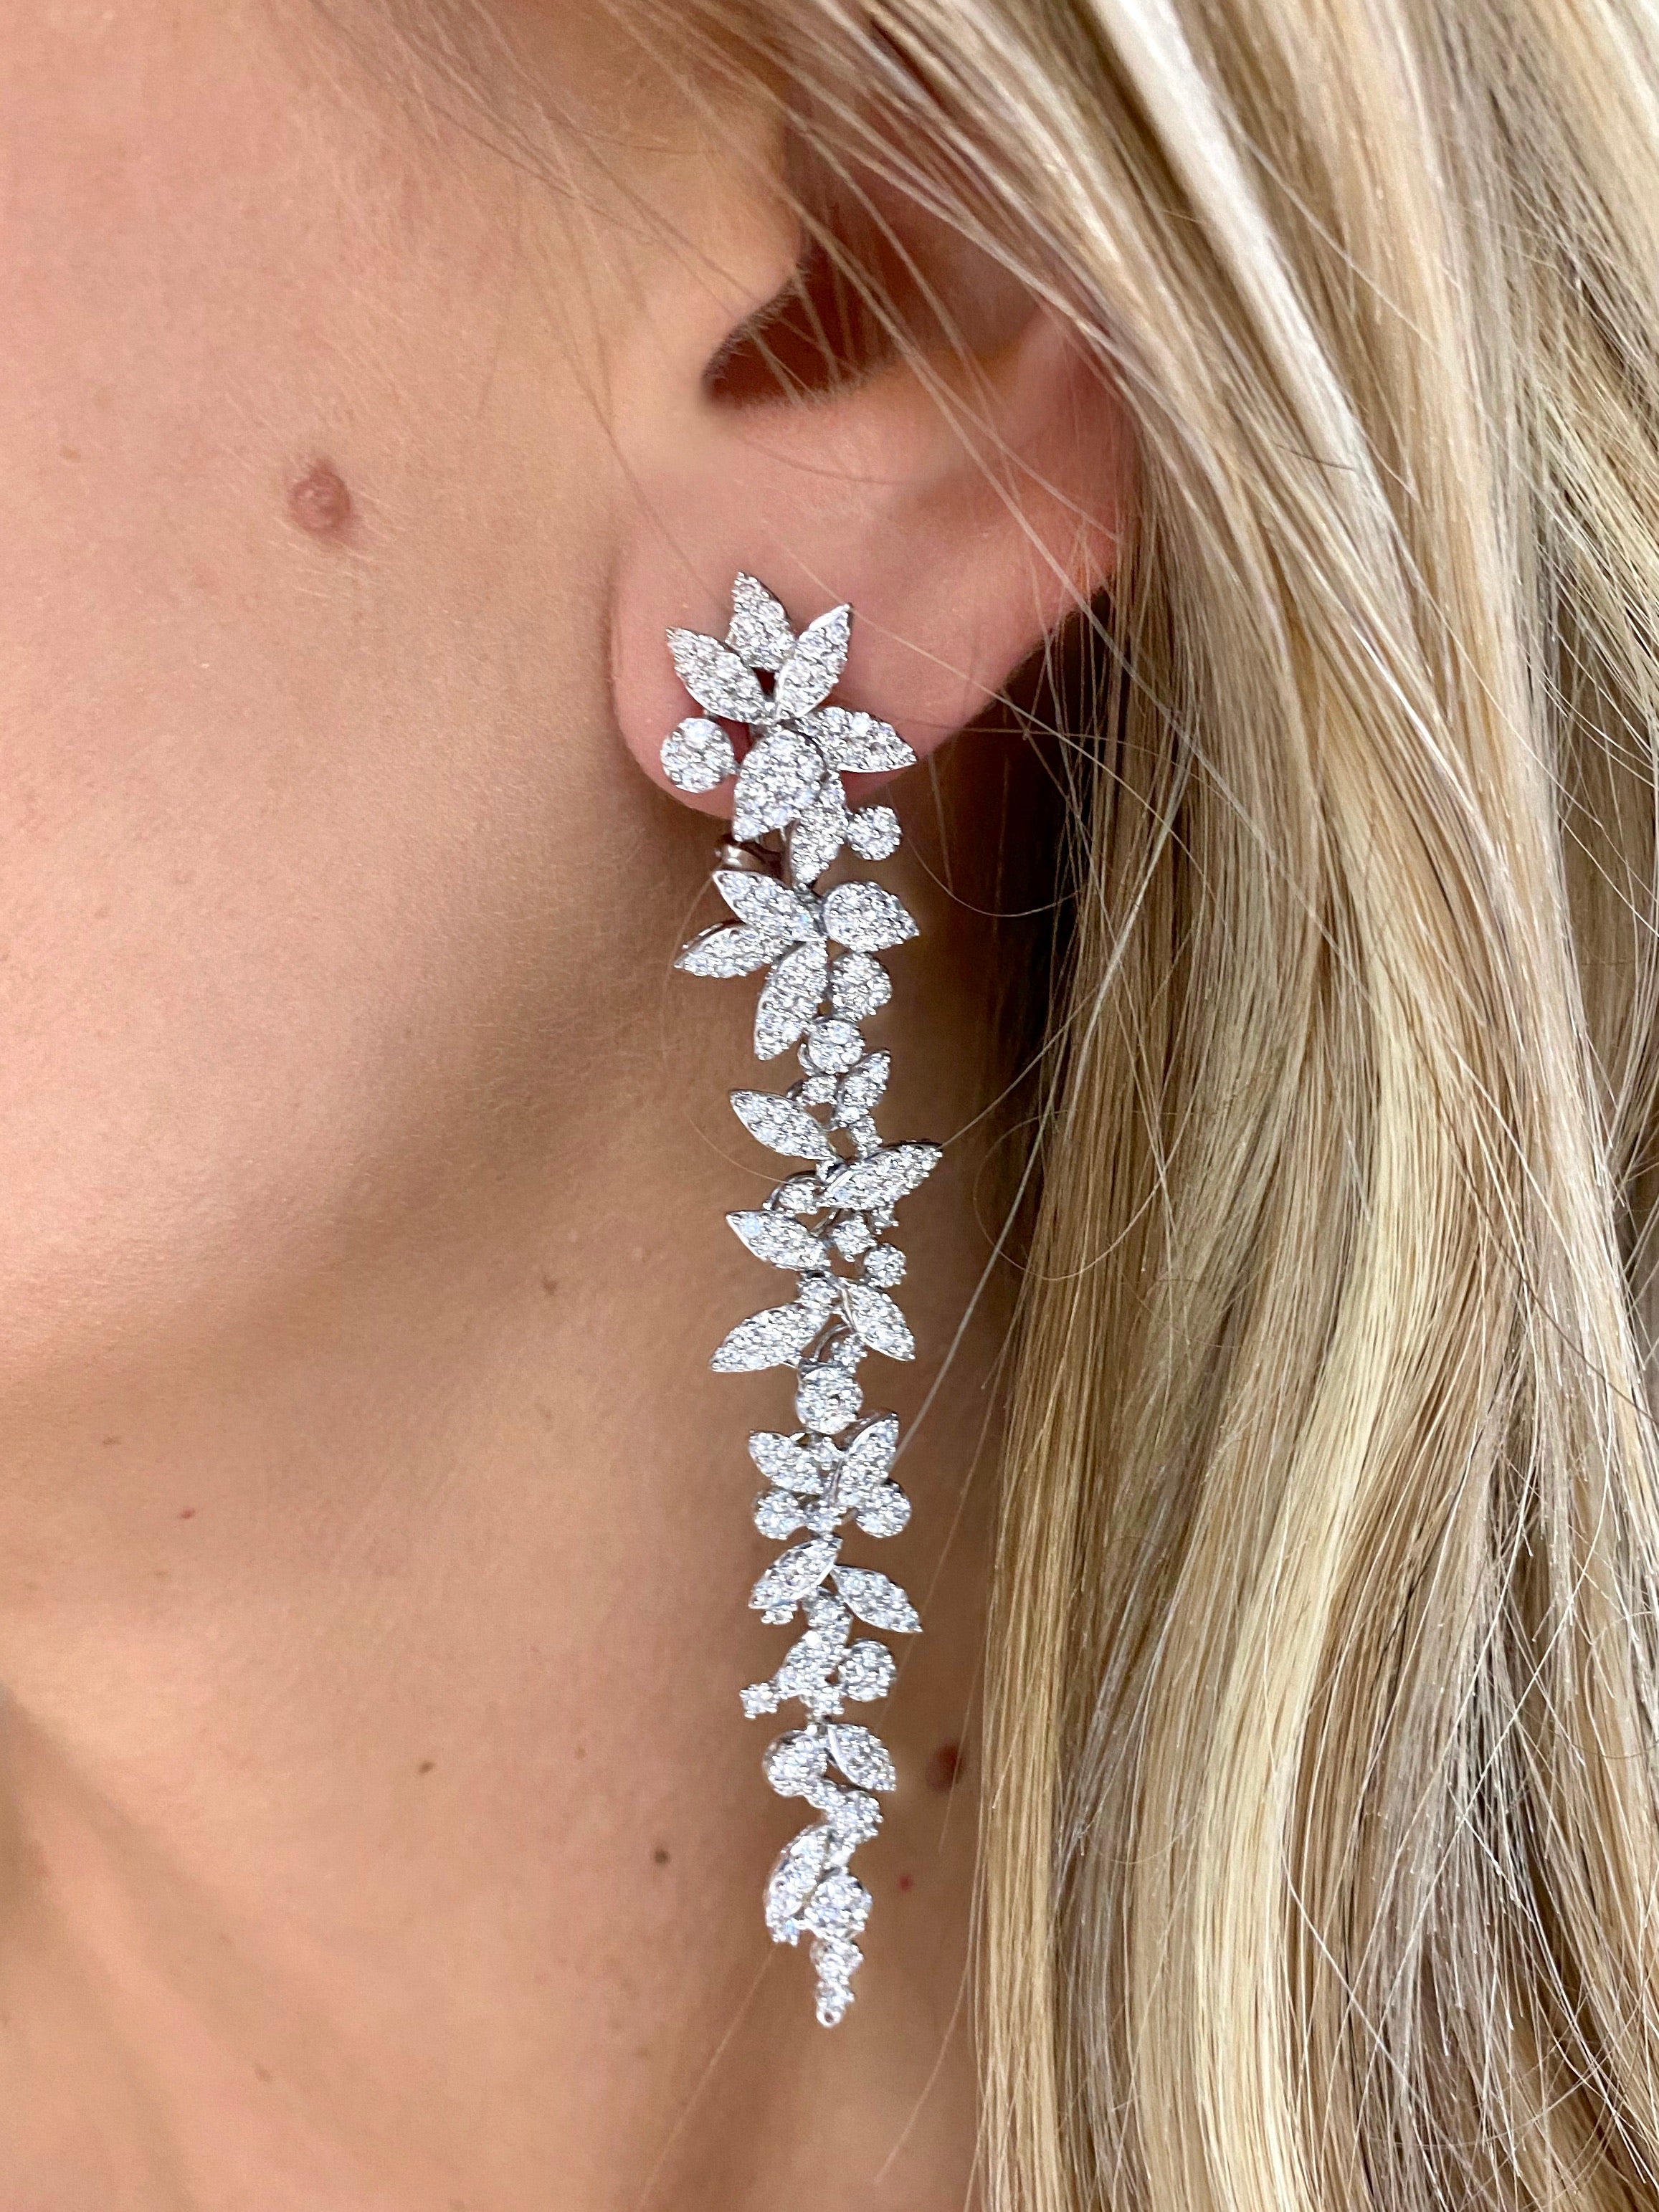 Share more than 215 flower diamond drop earrings